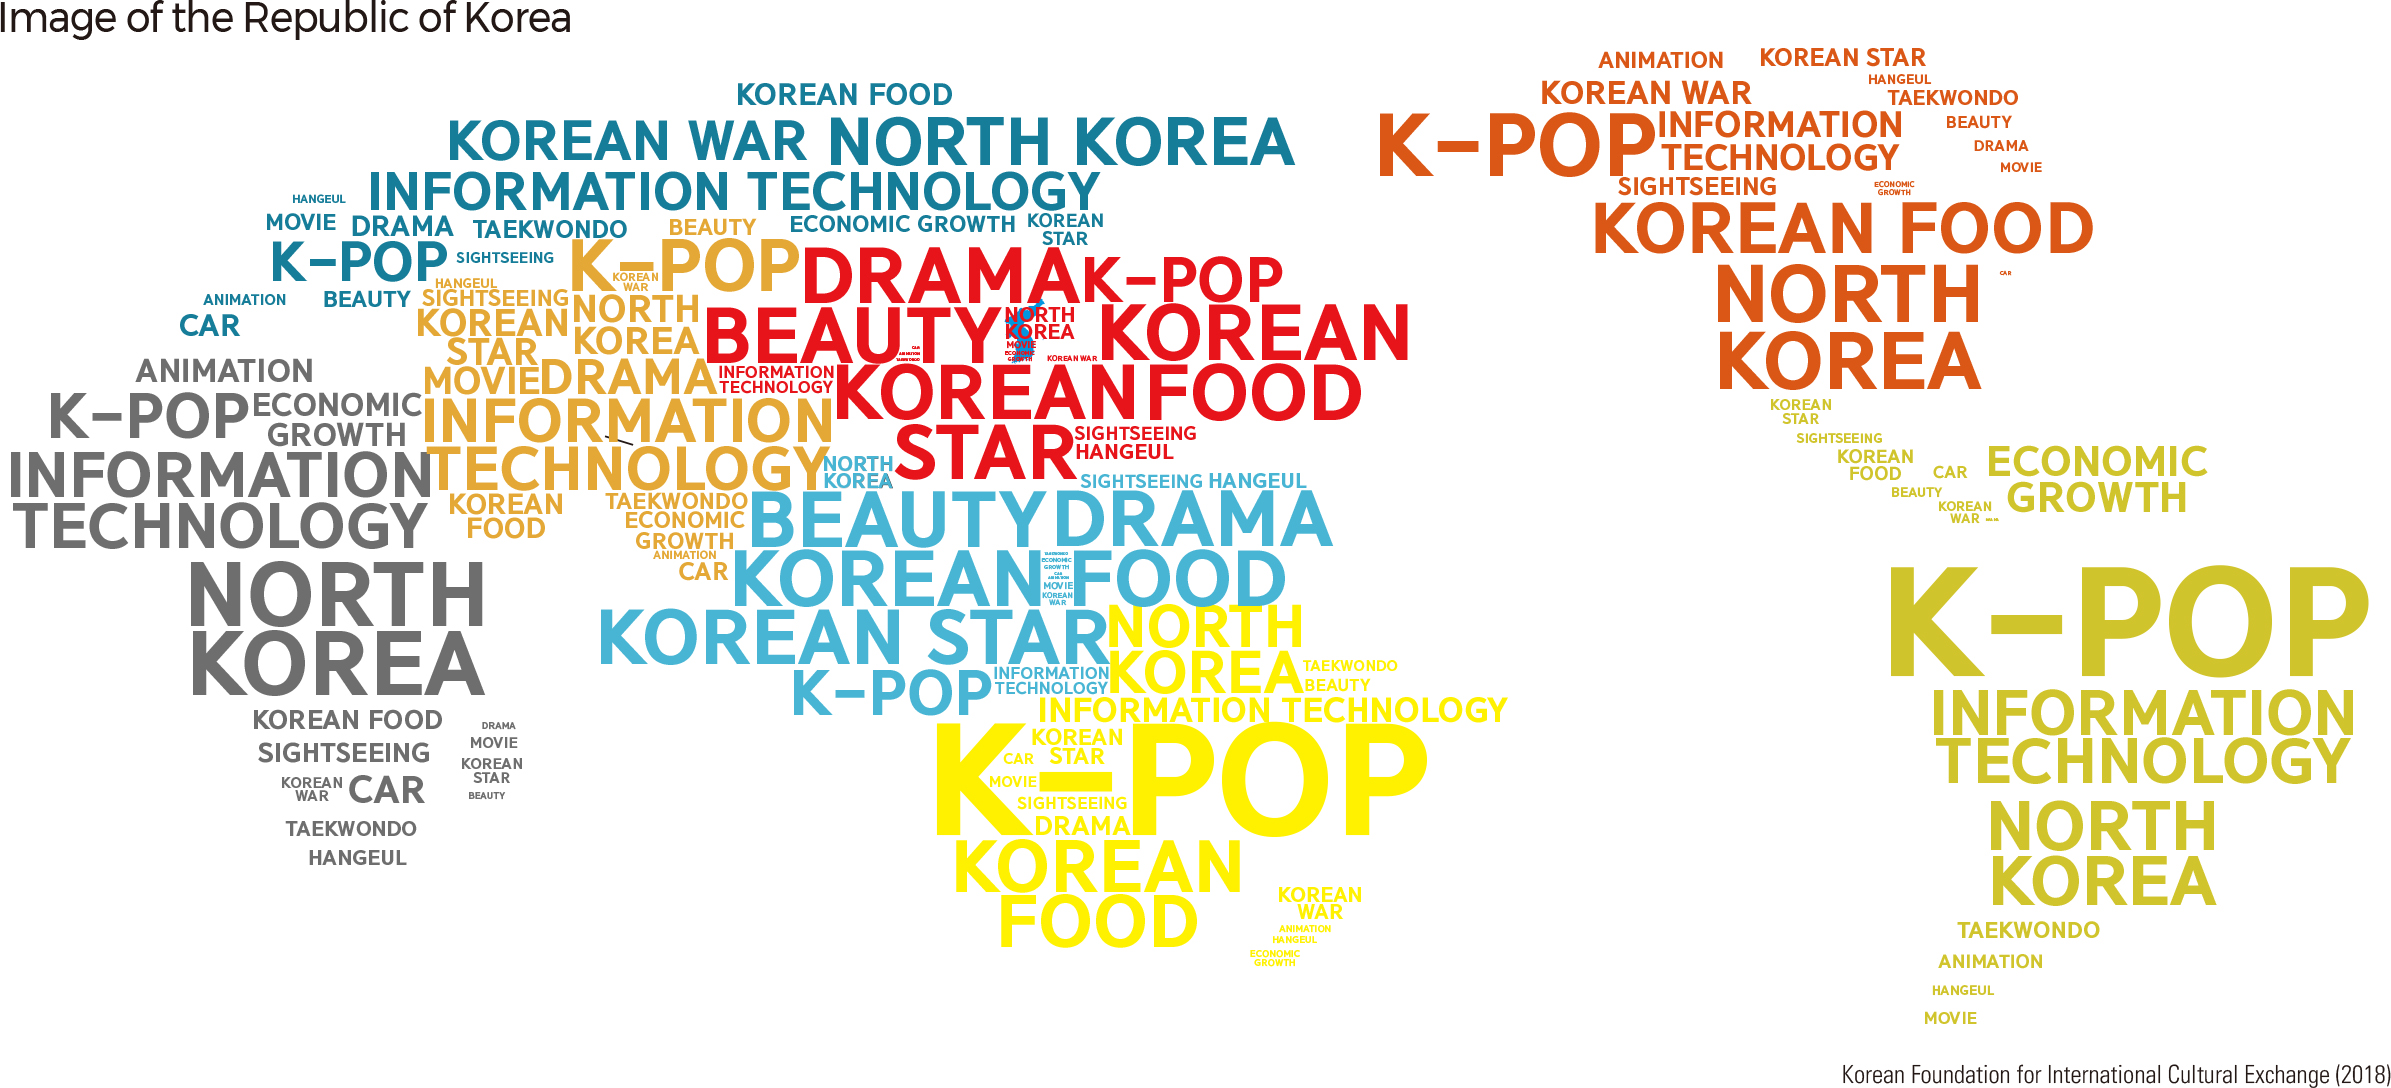 Image of the Republic of Korea